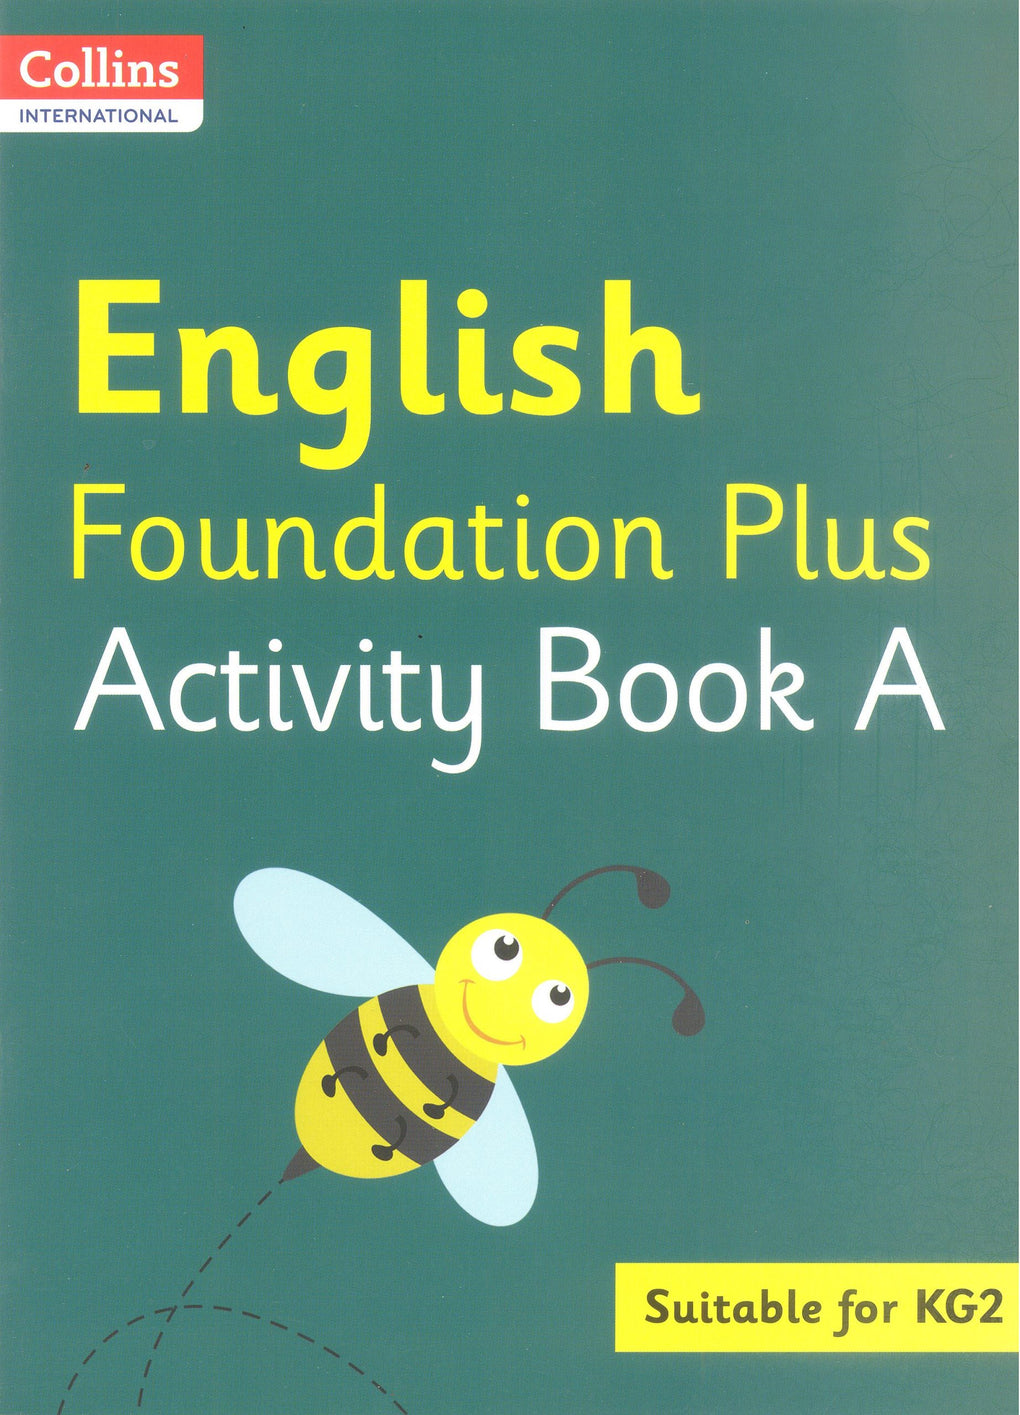 Collins International English Foundation Plus Activity Book A - Nursery - Generation's - Course Books - studypack.taleemihub.com